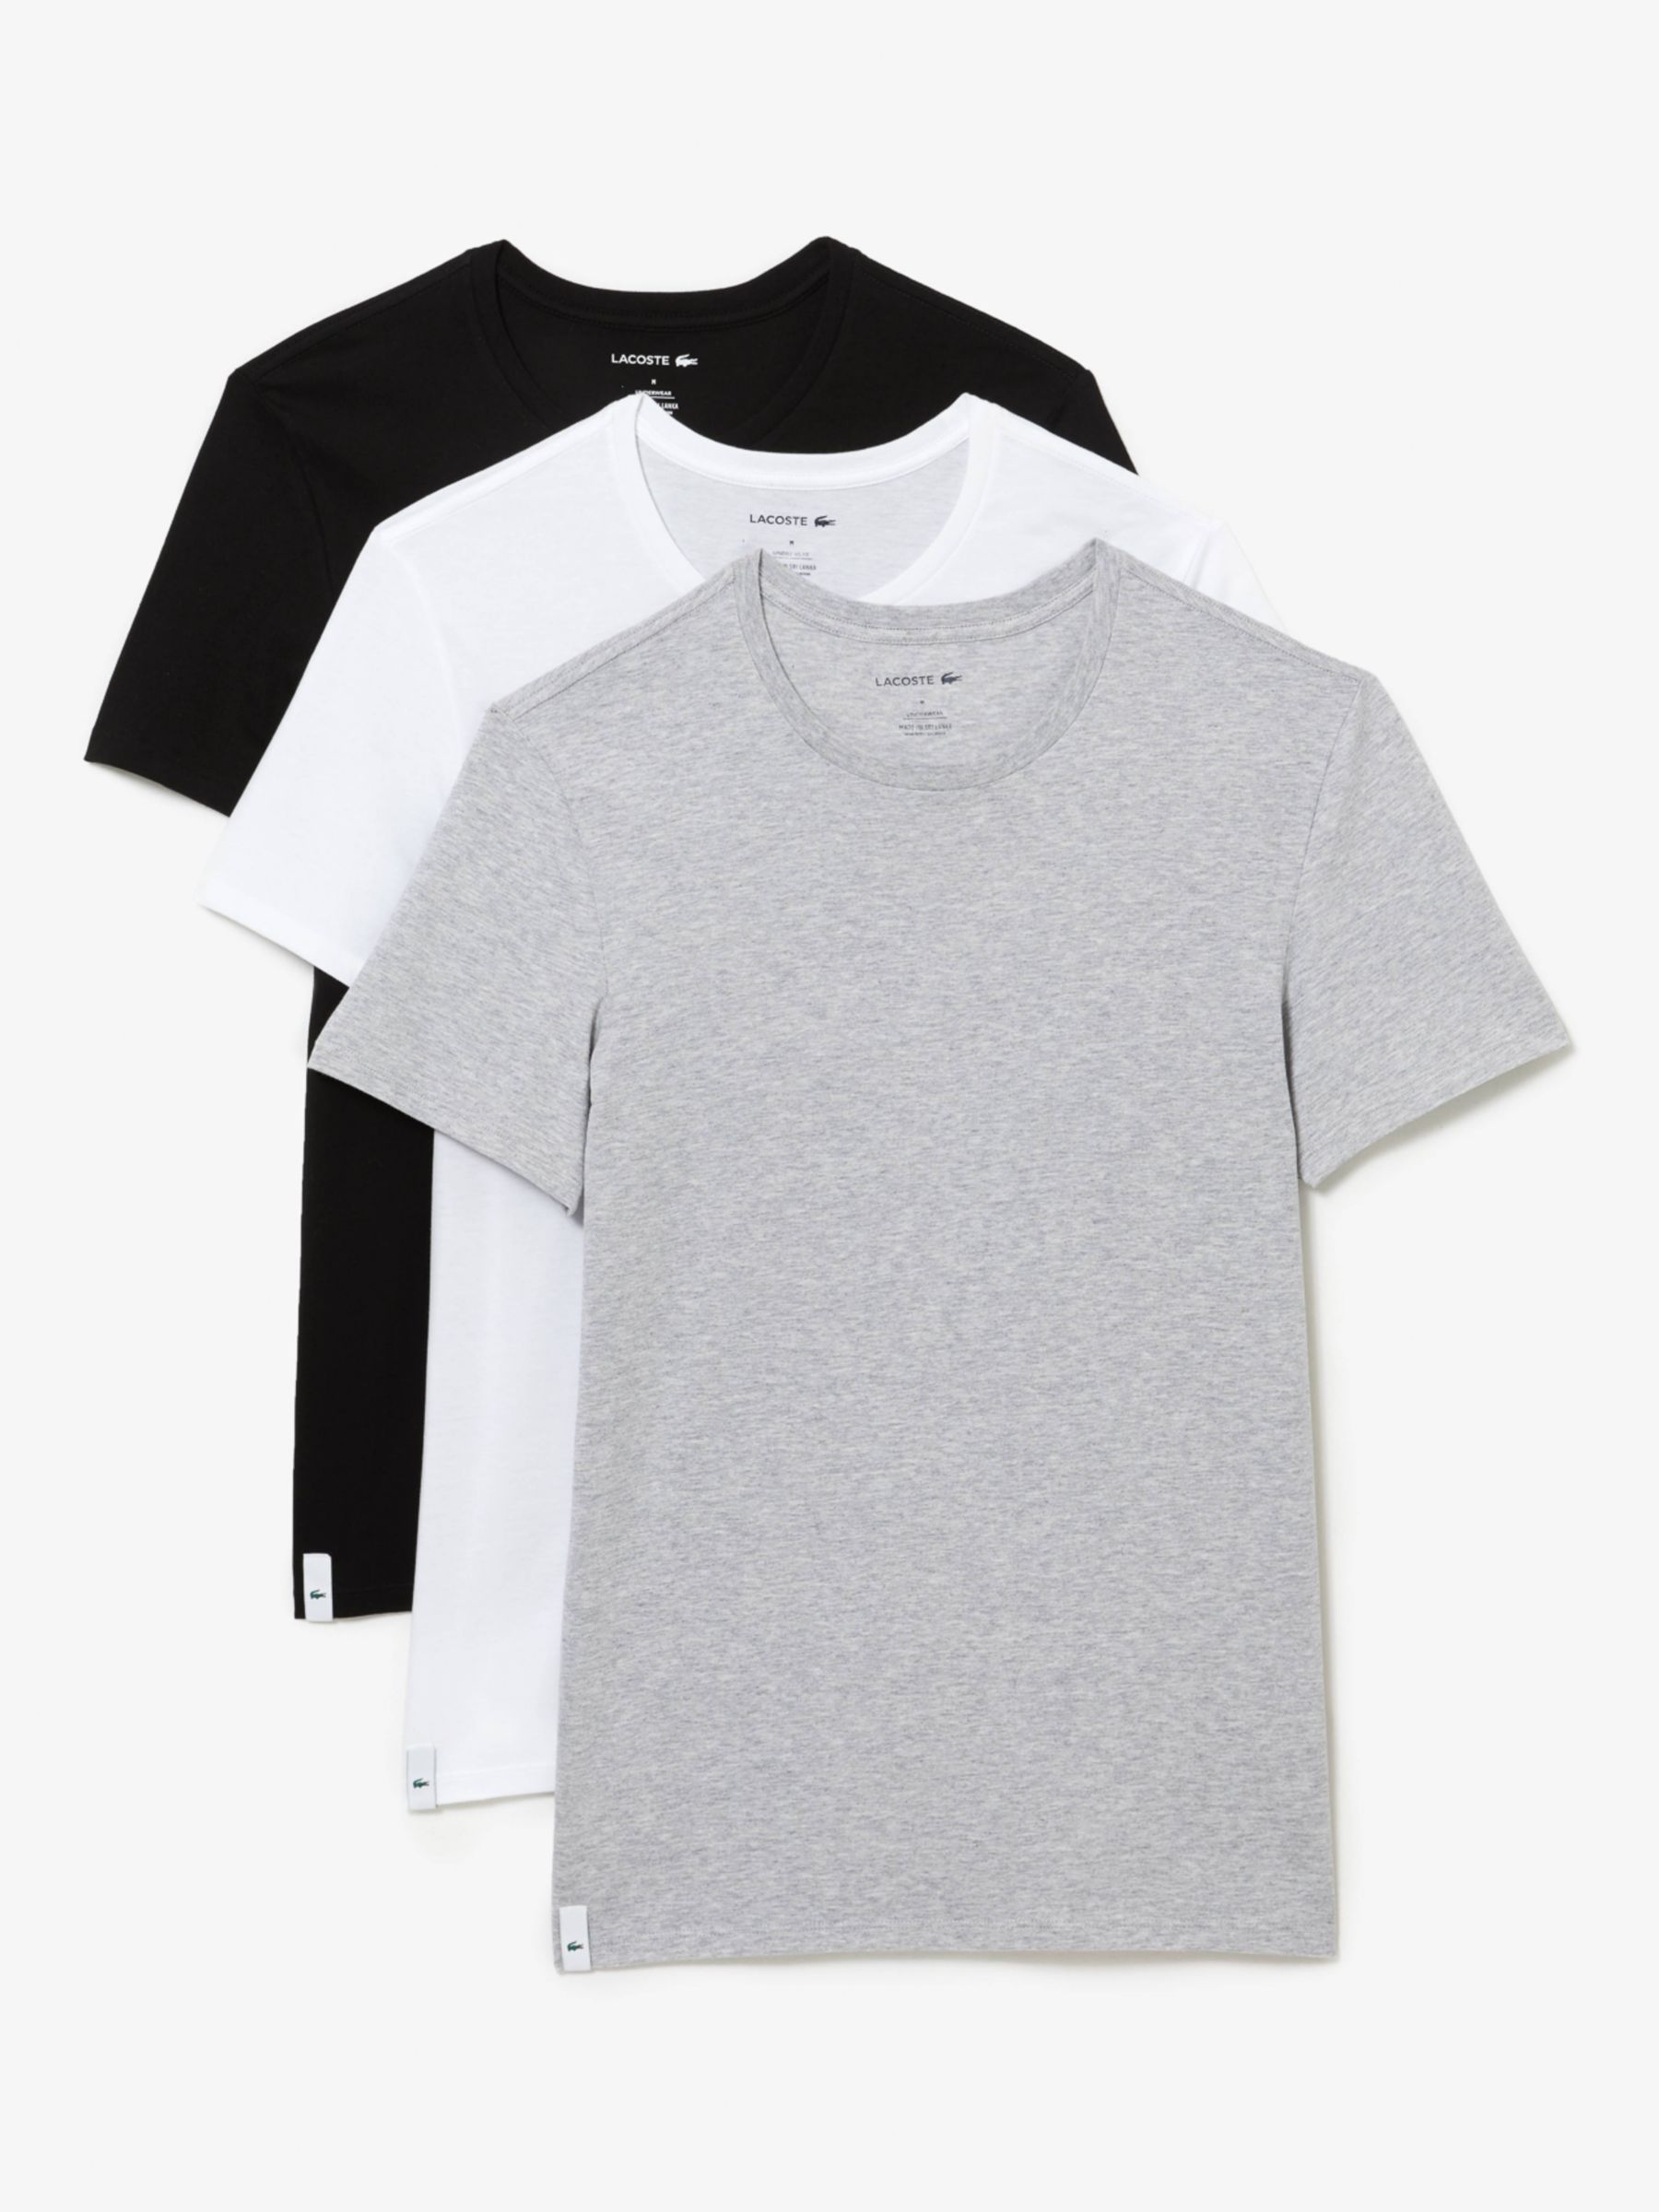 Lacoste Crew Neck Slim T-Shirts, Pack of 3, Black/White/Grey at John ...